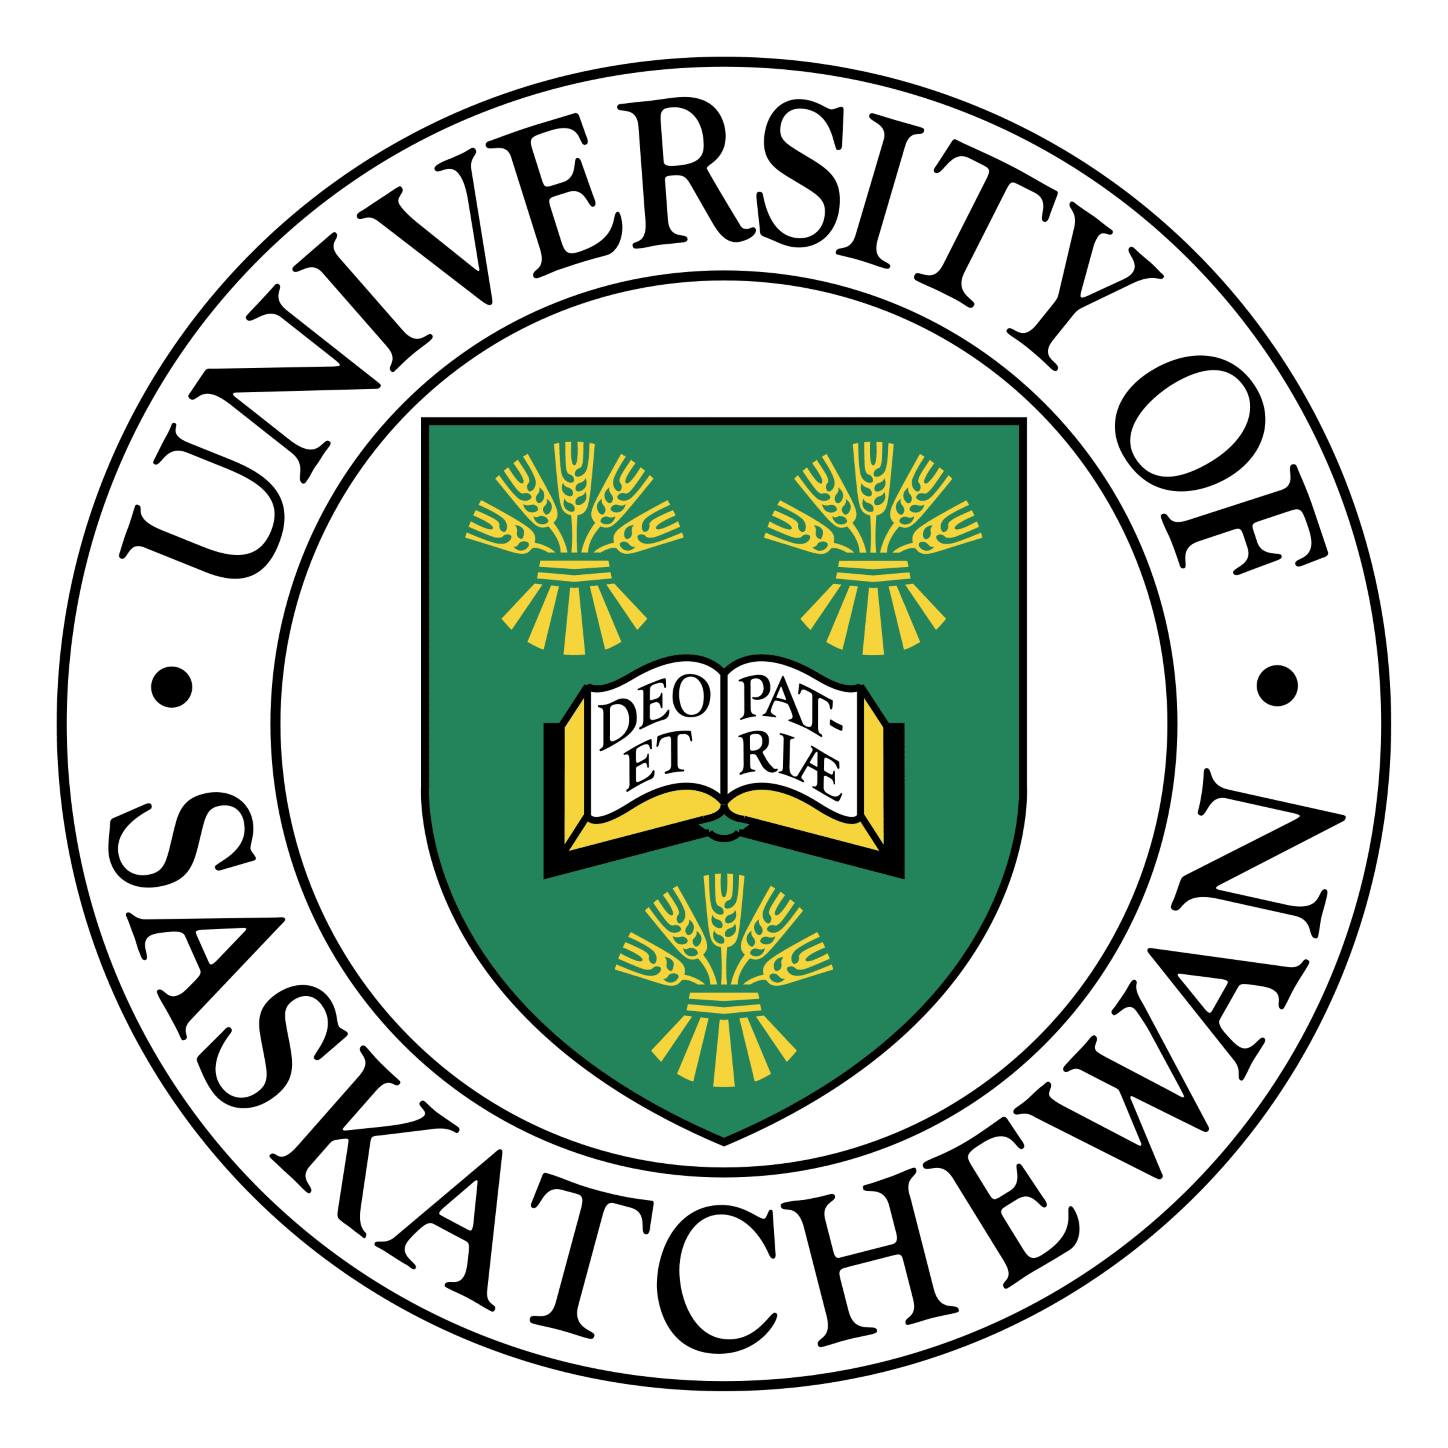 The University of Saskatchewan (USask)